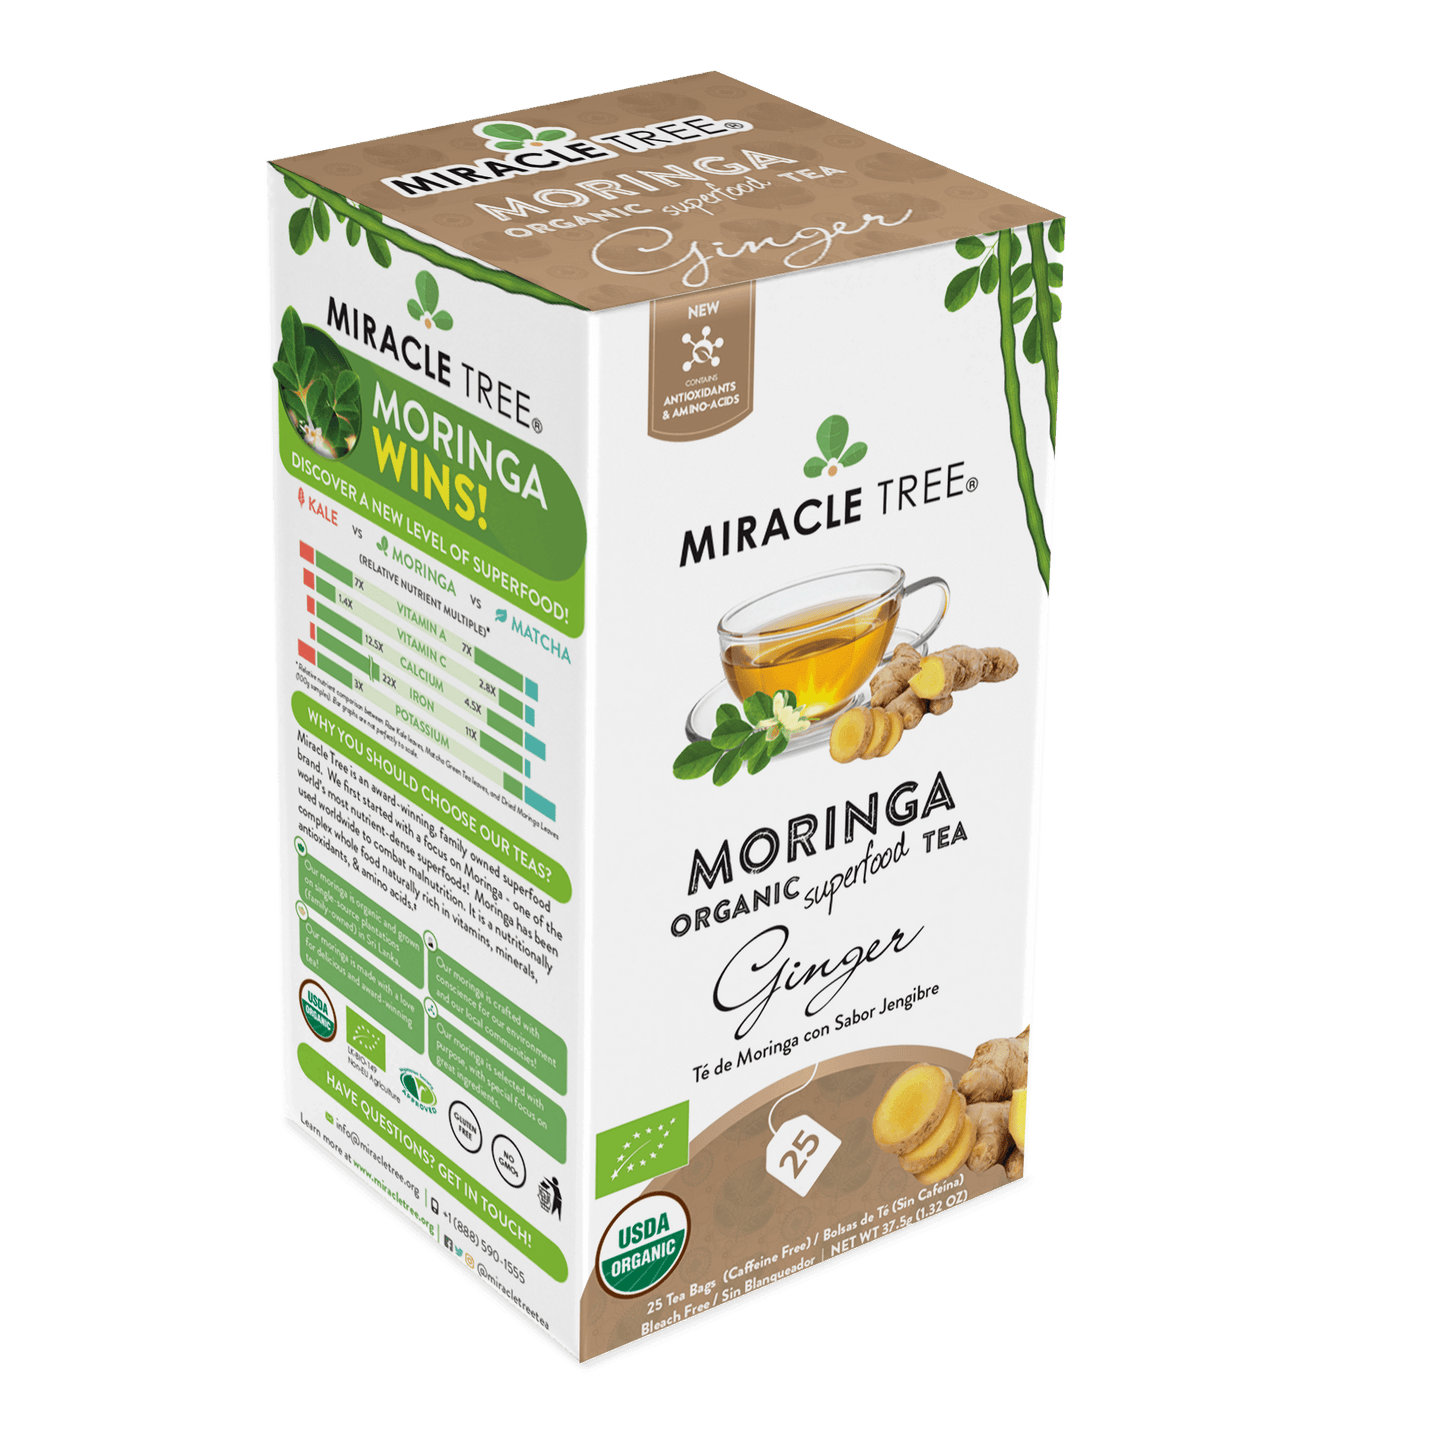 Miracle Tree's Organic Moringa Tea, Ginger